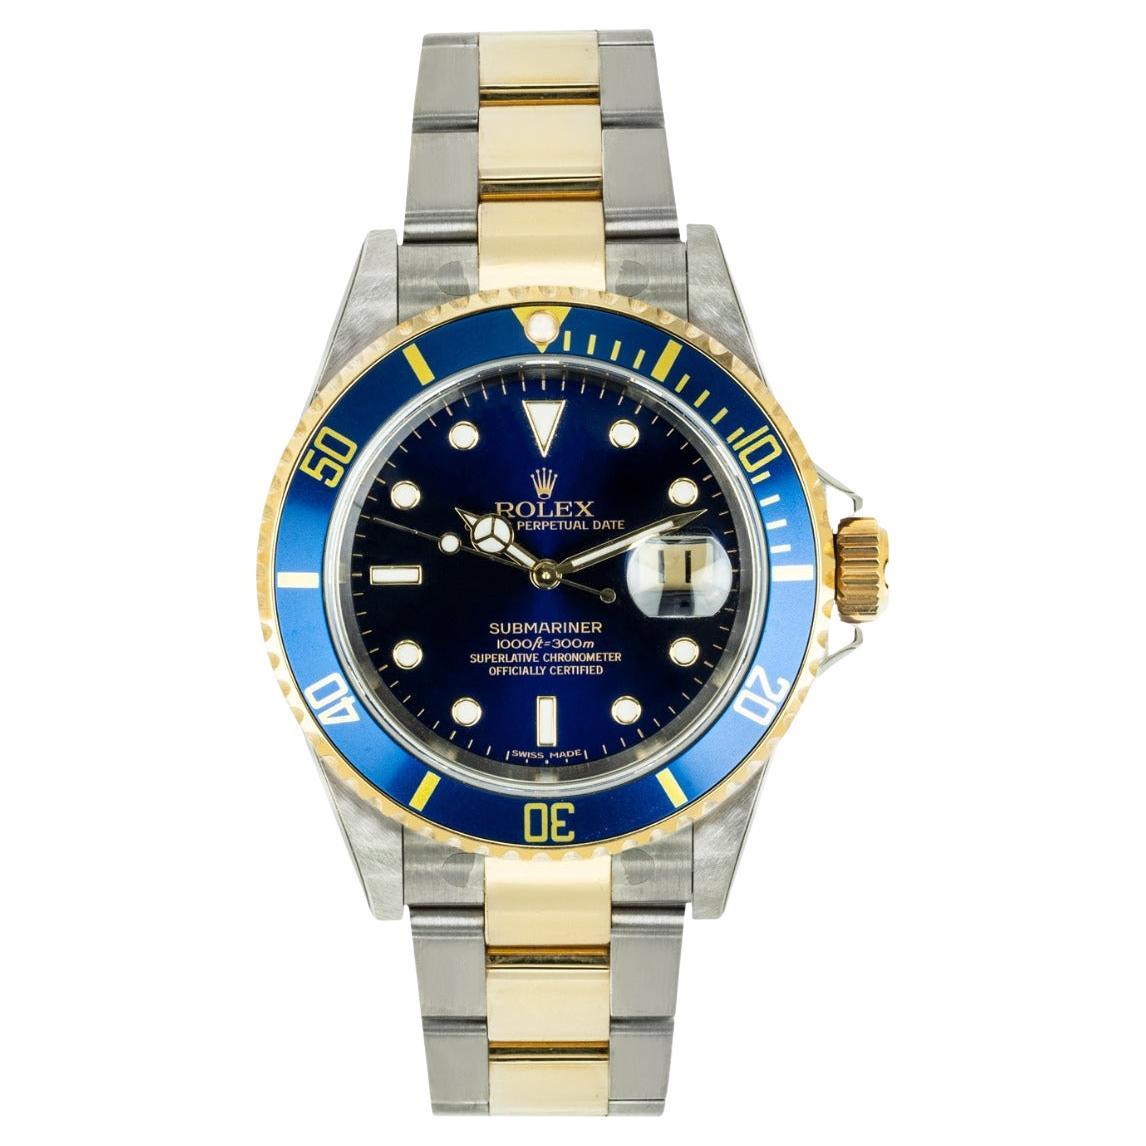 Rolex Montre Submariner Date NOS en acier inoxydable et or jaune avec cadran bleu 16613